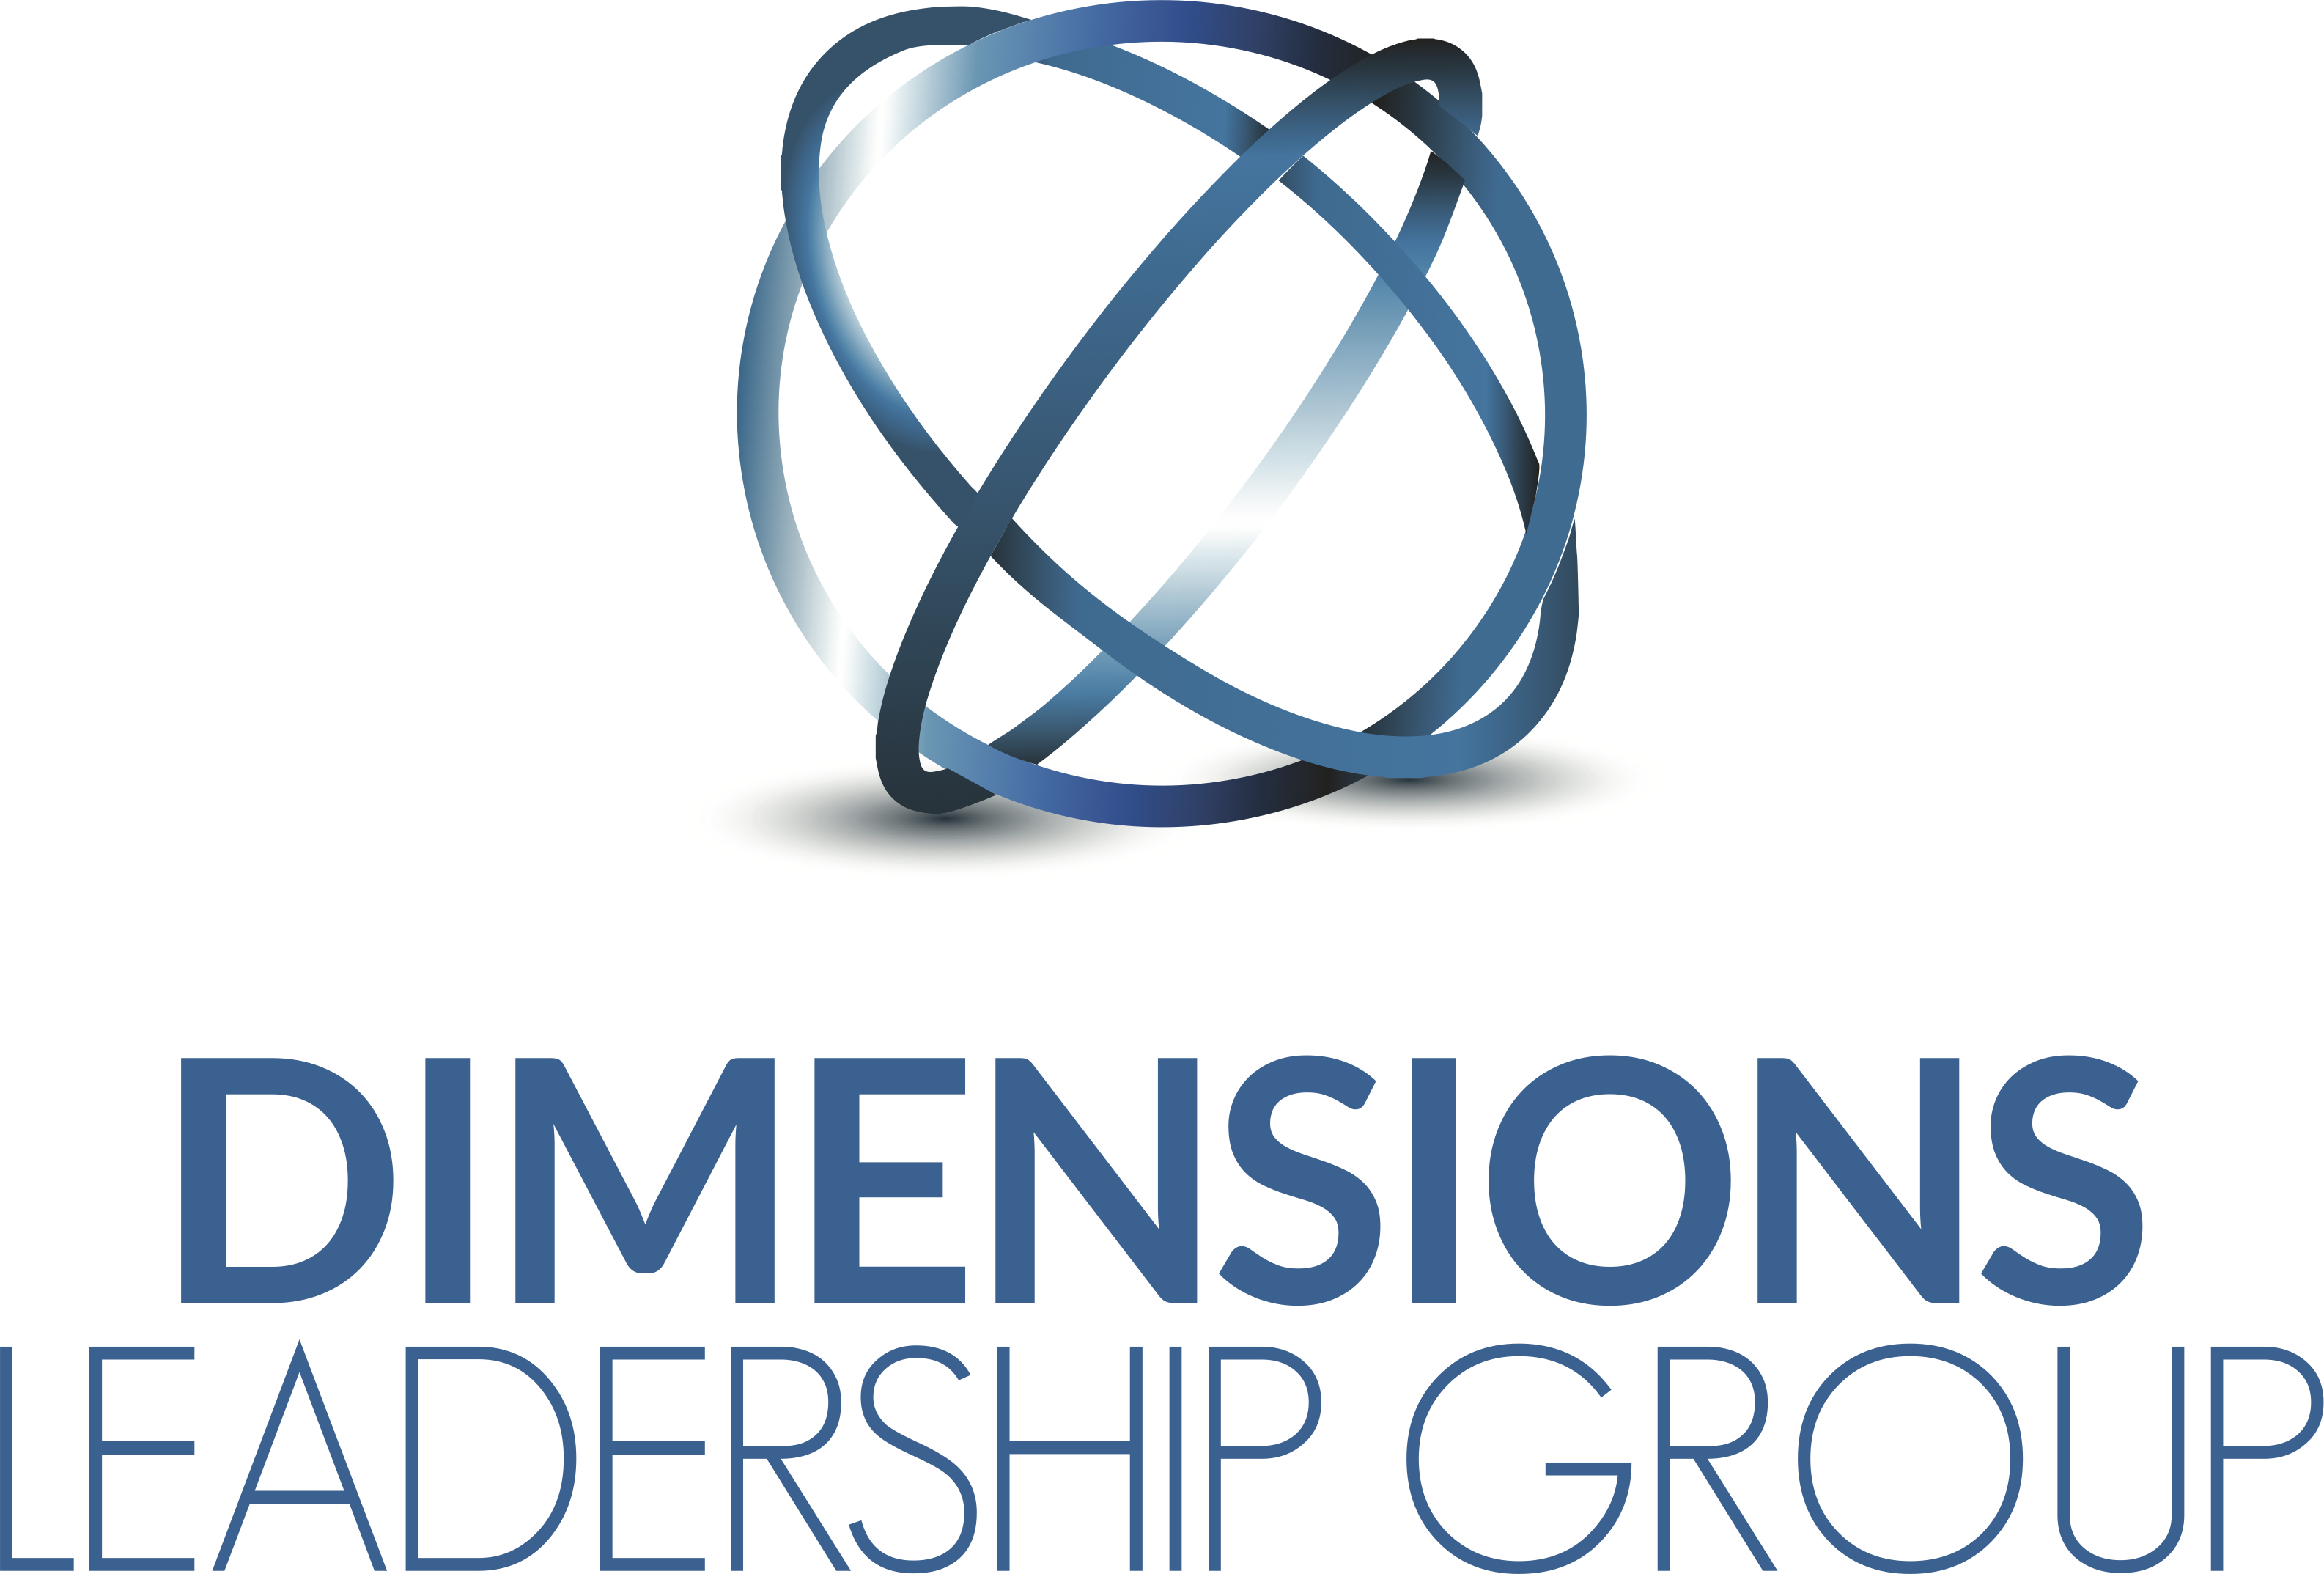 Dimensions Leadership Group